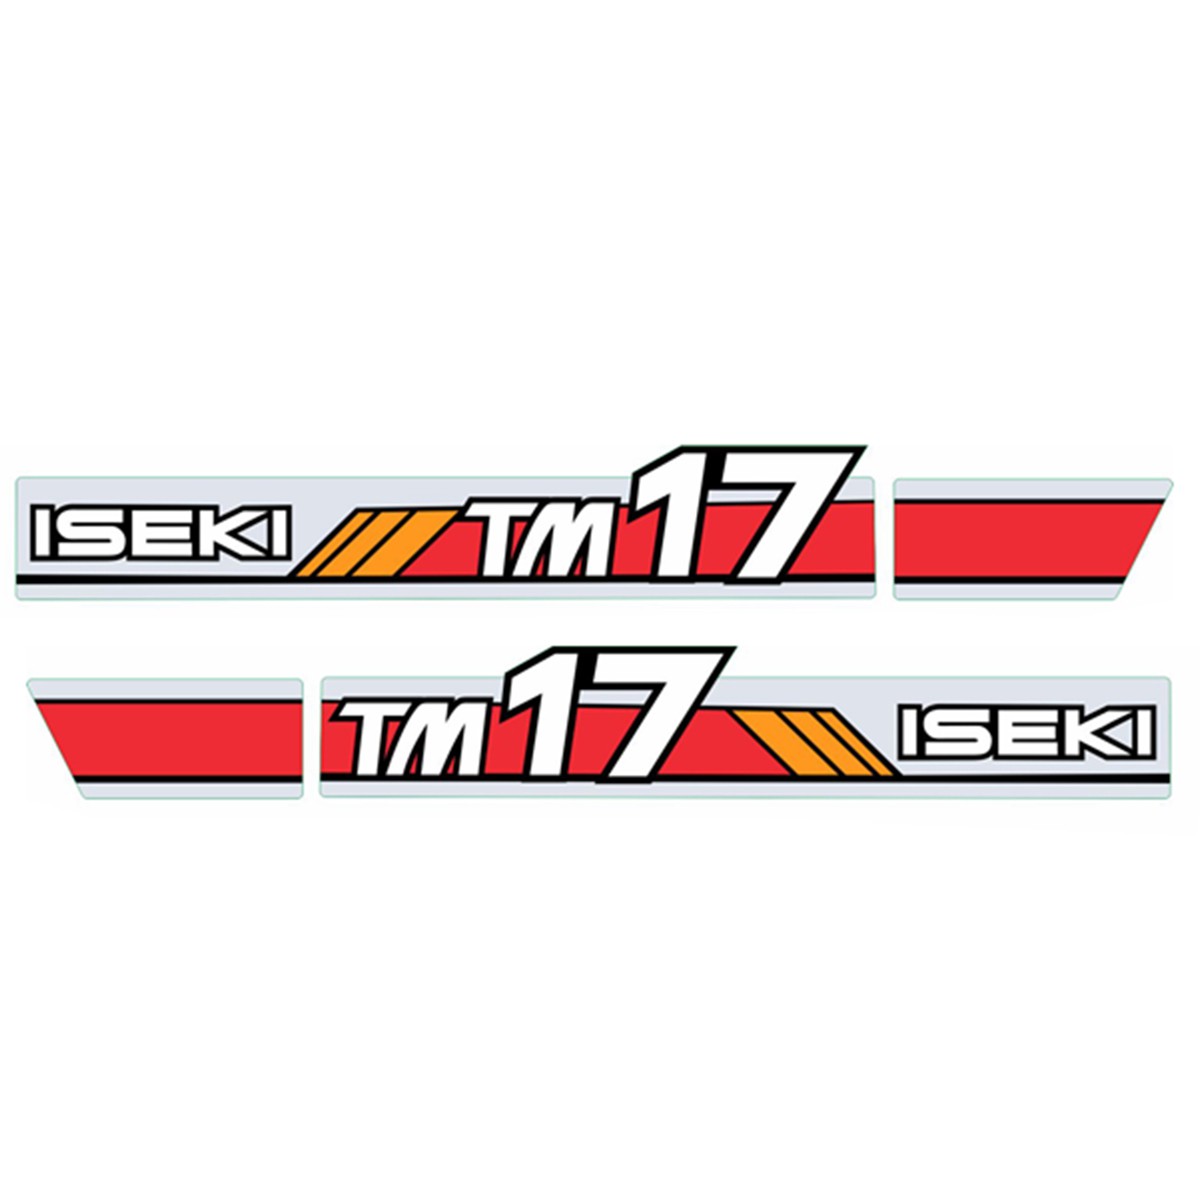 Iseki TM17 stickers